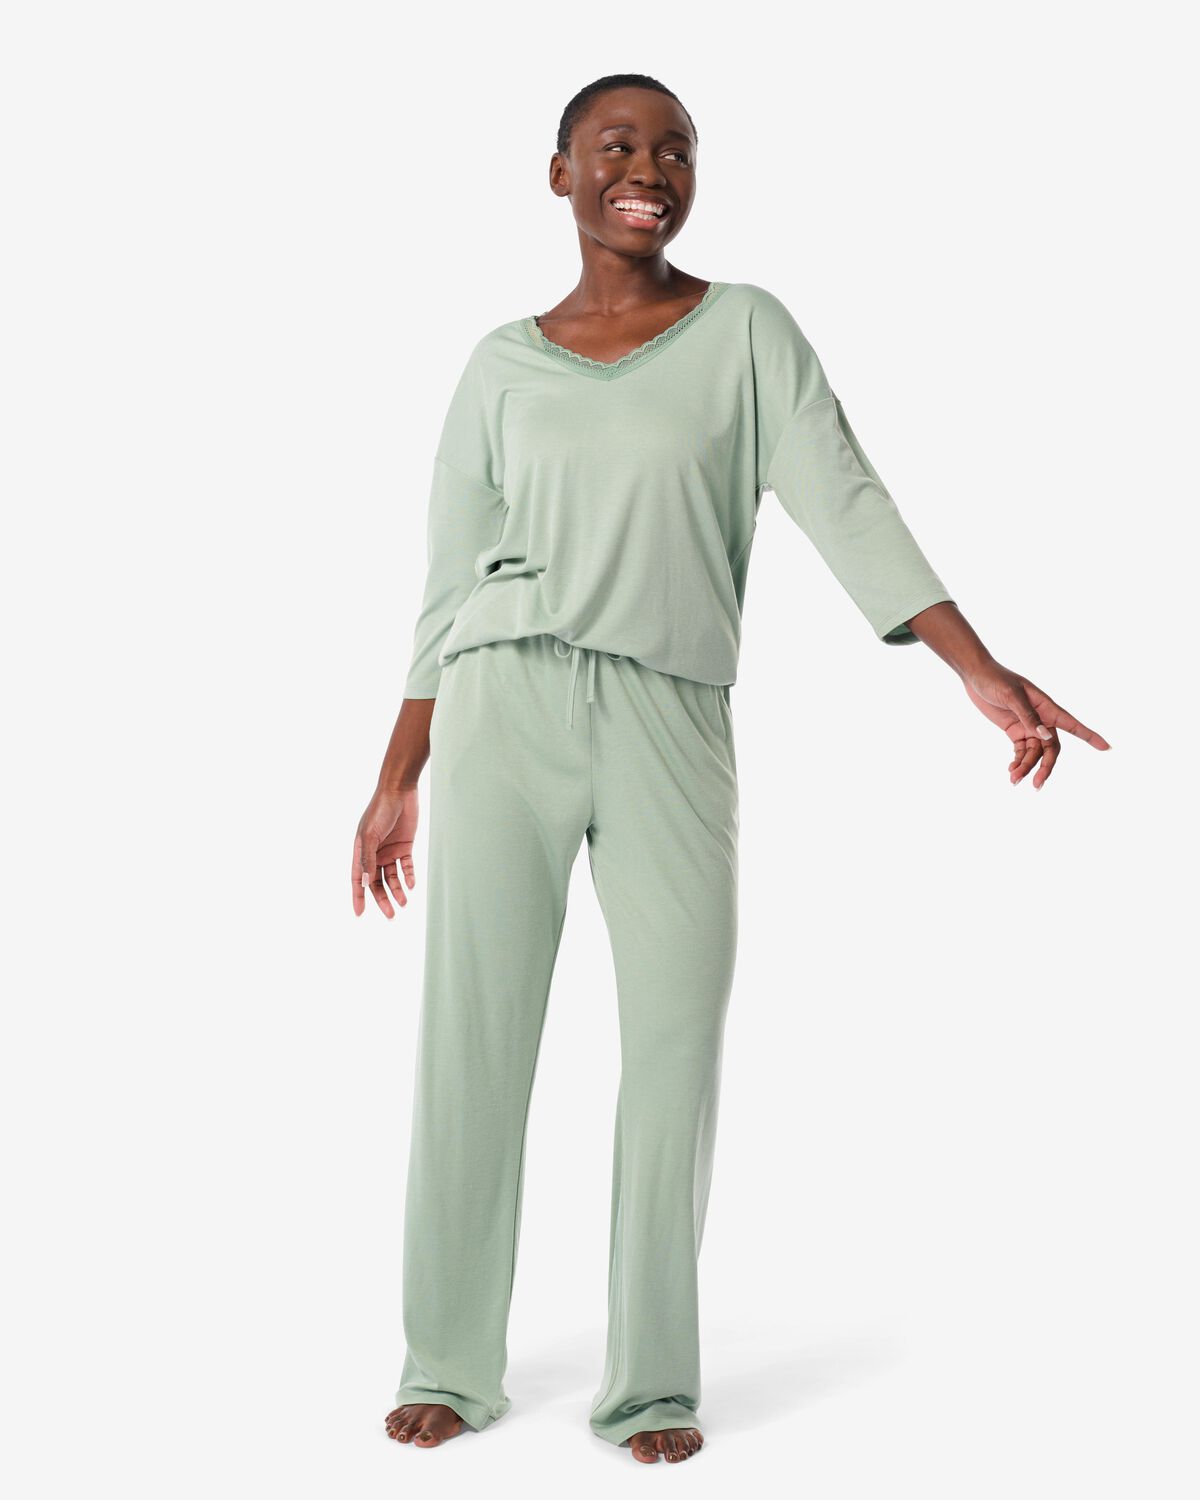 Damen-Pyjamaset mit Viskose, grün - 200167 - HEMA